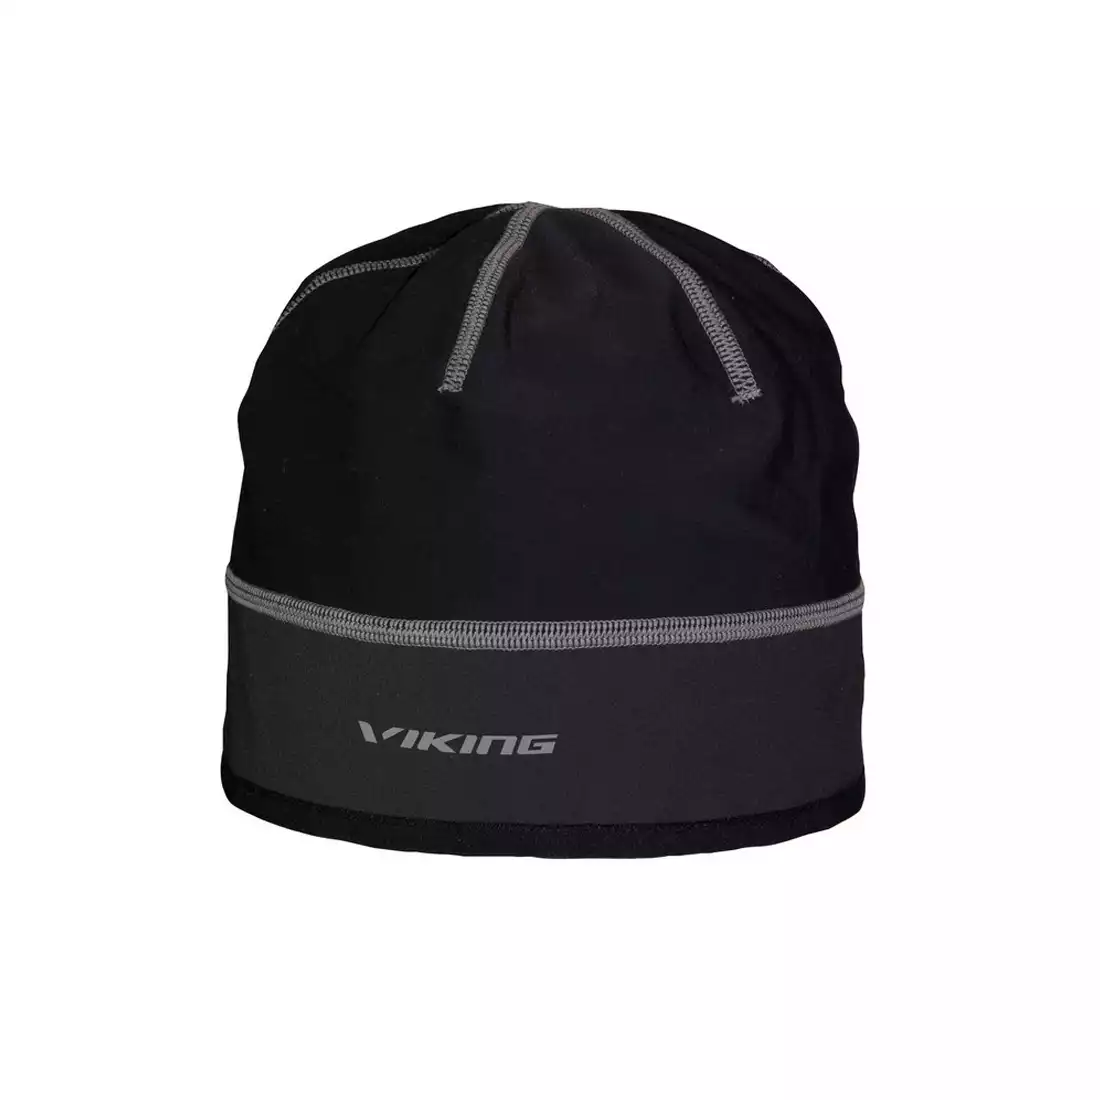 VIKING uniwersalna czapka zimowa Palmer GORE-TEX Infinium black 215/16/2016/08/58